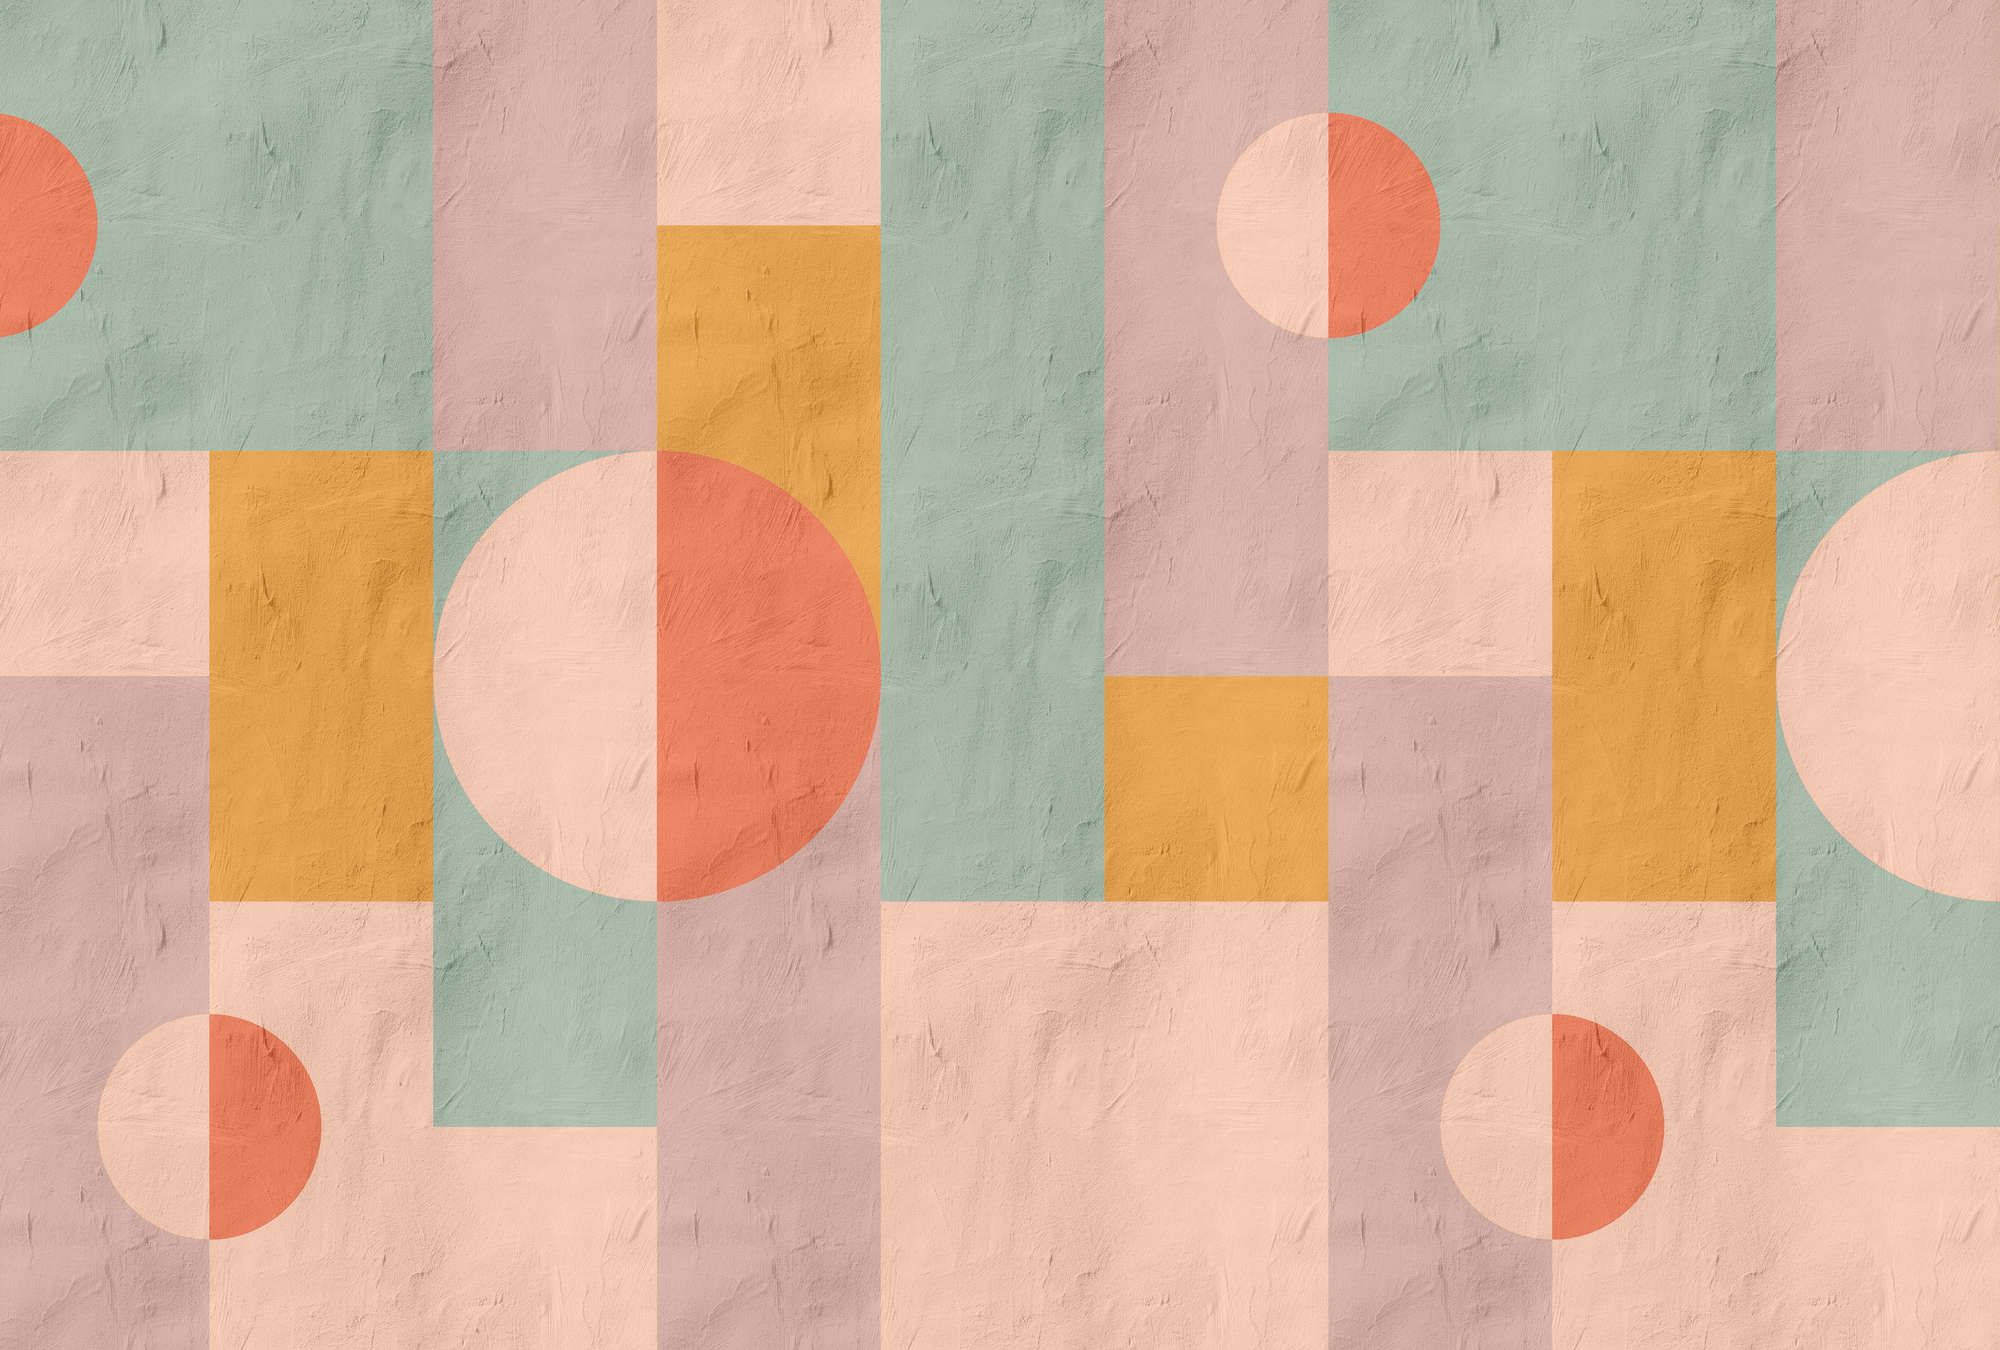             Photo wallpaper »estrella 2« - Graphic pattern in clay plaster look - red, orange, mint | Smooth, slightly shiny premium non-woven fabric
        